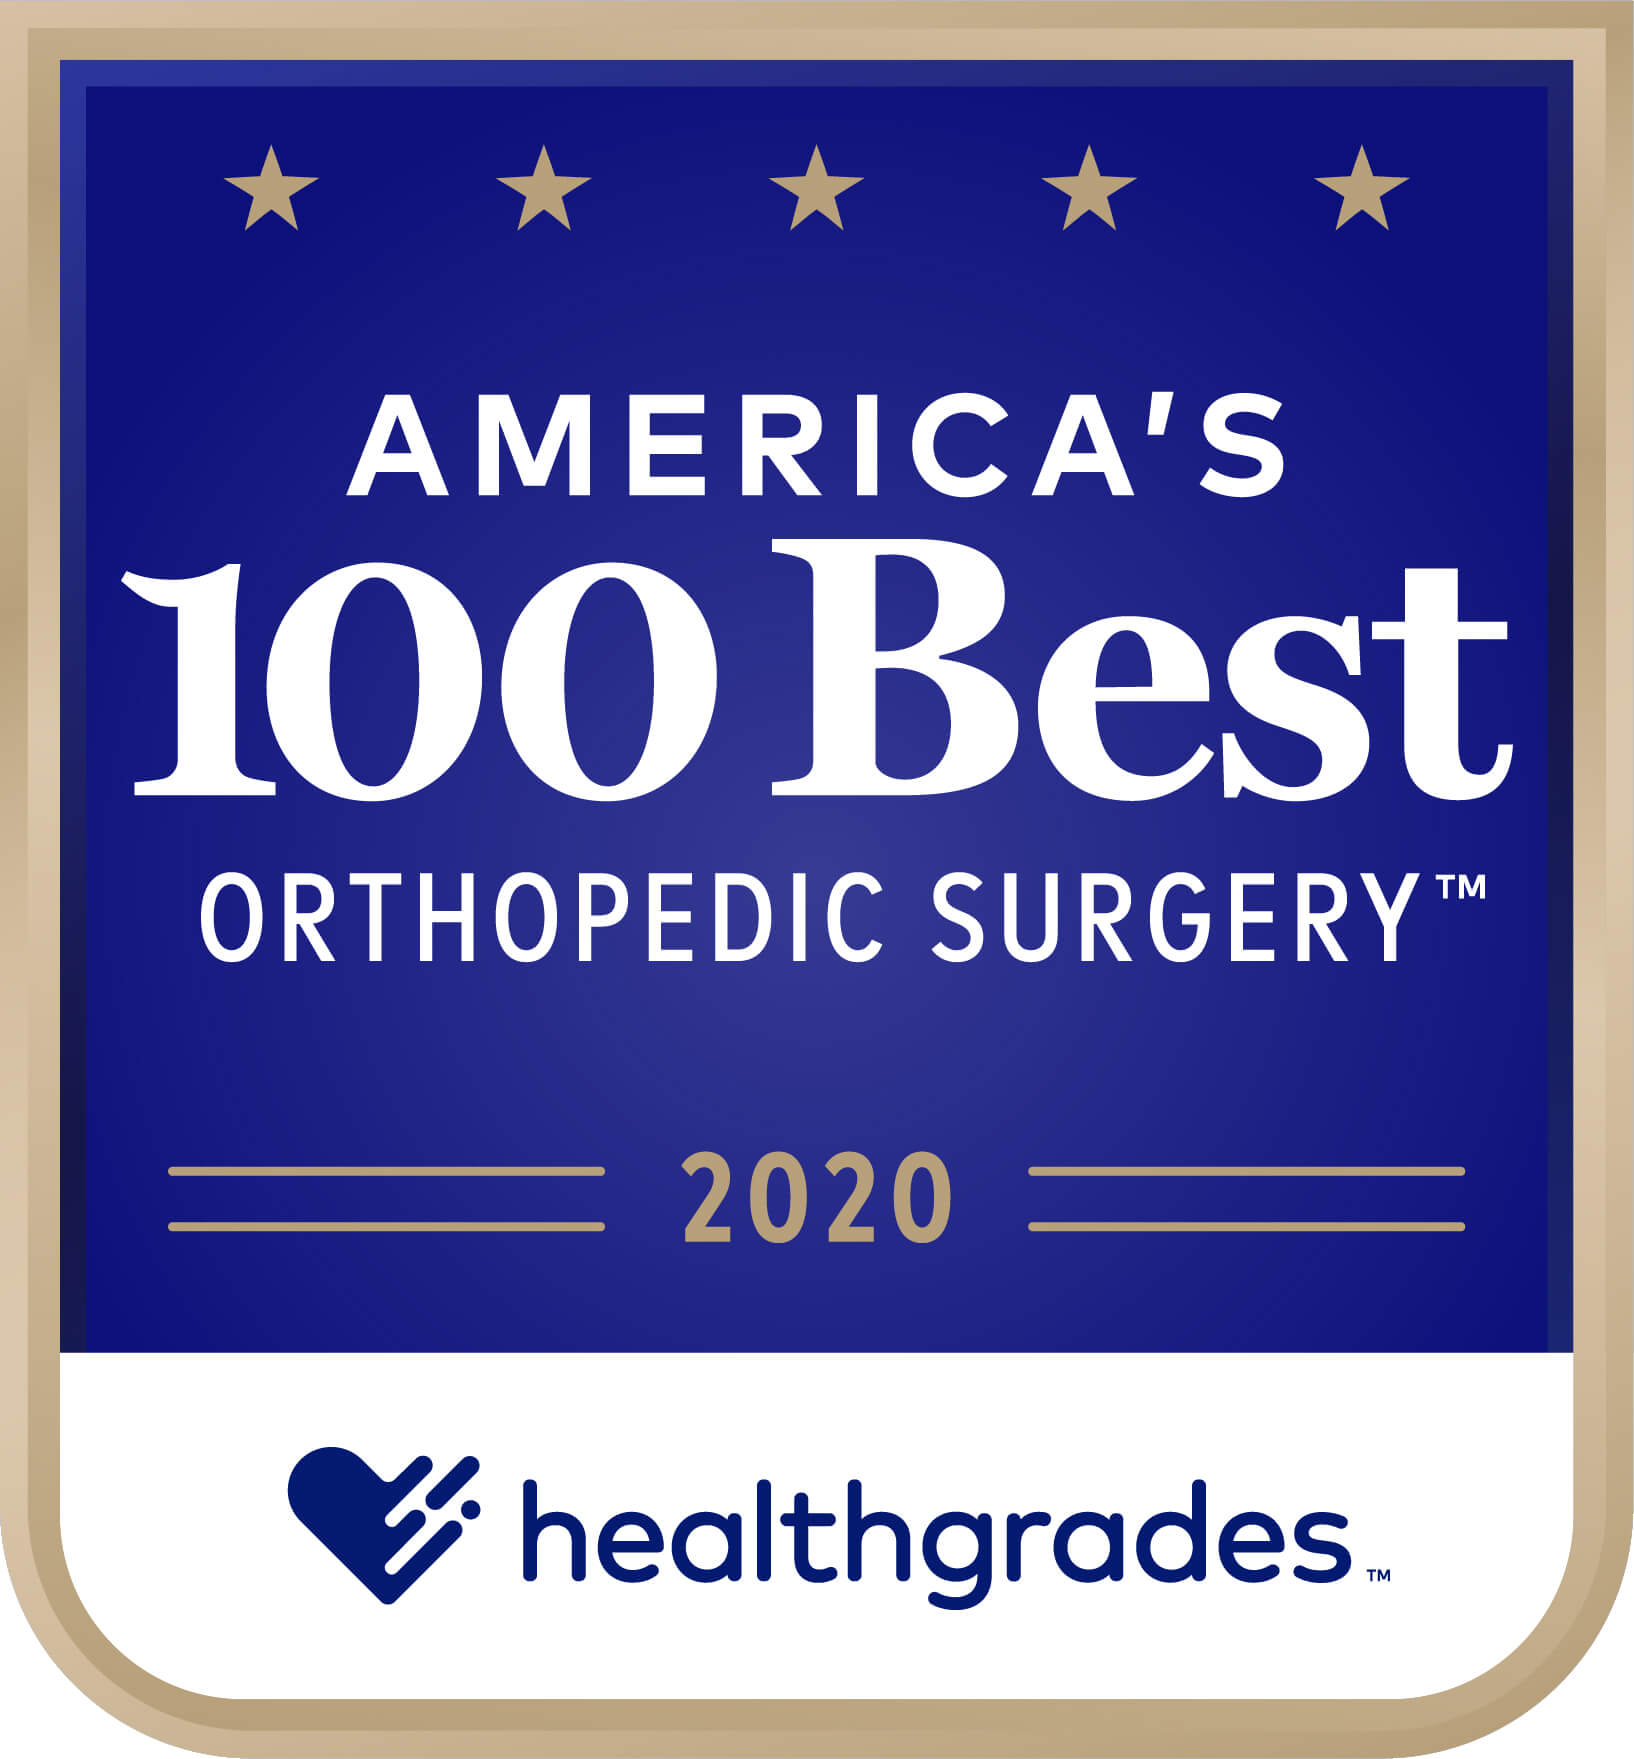 Healthgrades 100 Best Orthopedic Surgery Award 2020